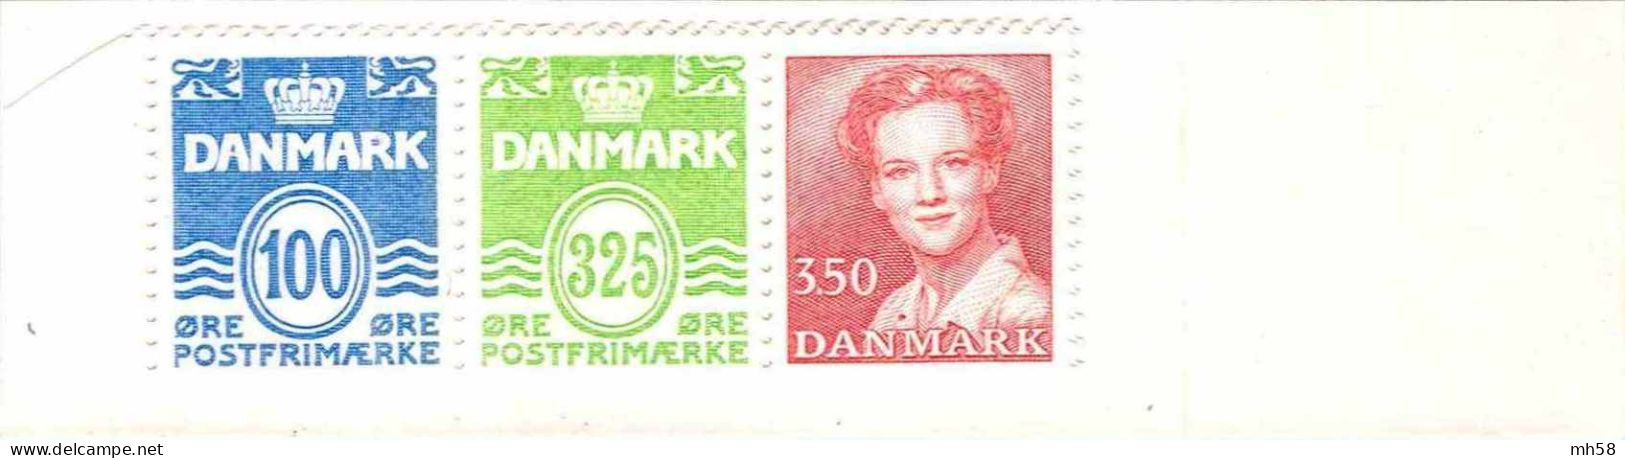 DANEMARK 1990 - Carnet / Booklet / MH Indice C10 - 10 Kr Chiffres / Reine Margarethe - YT C 966 I / MI MH 41 - Carnets